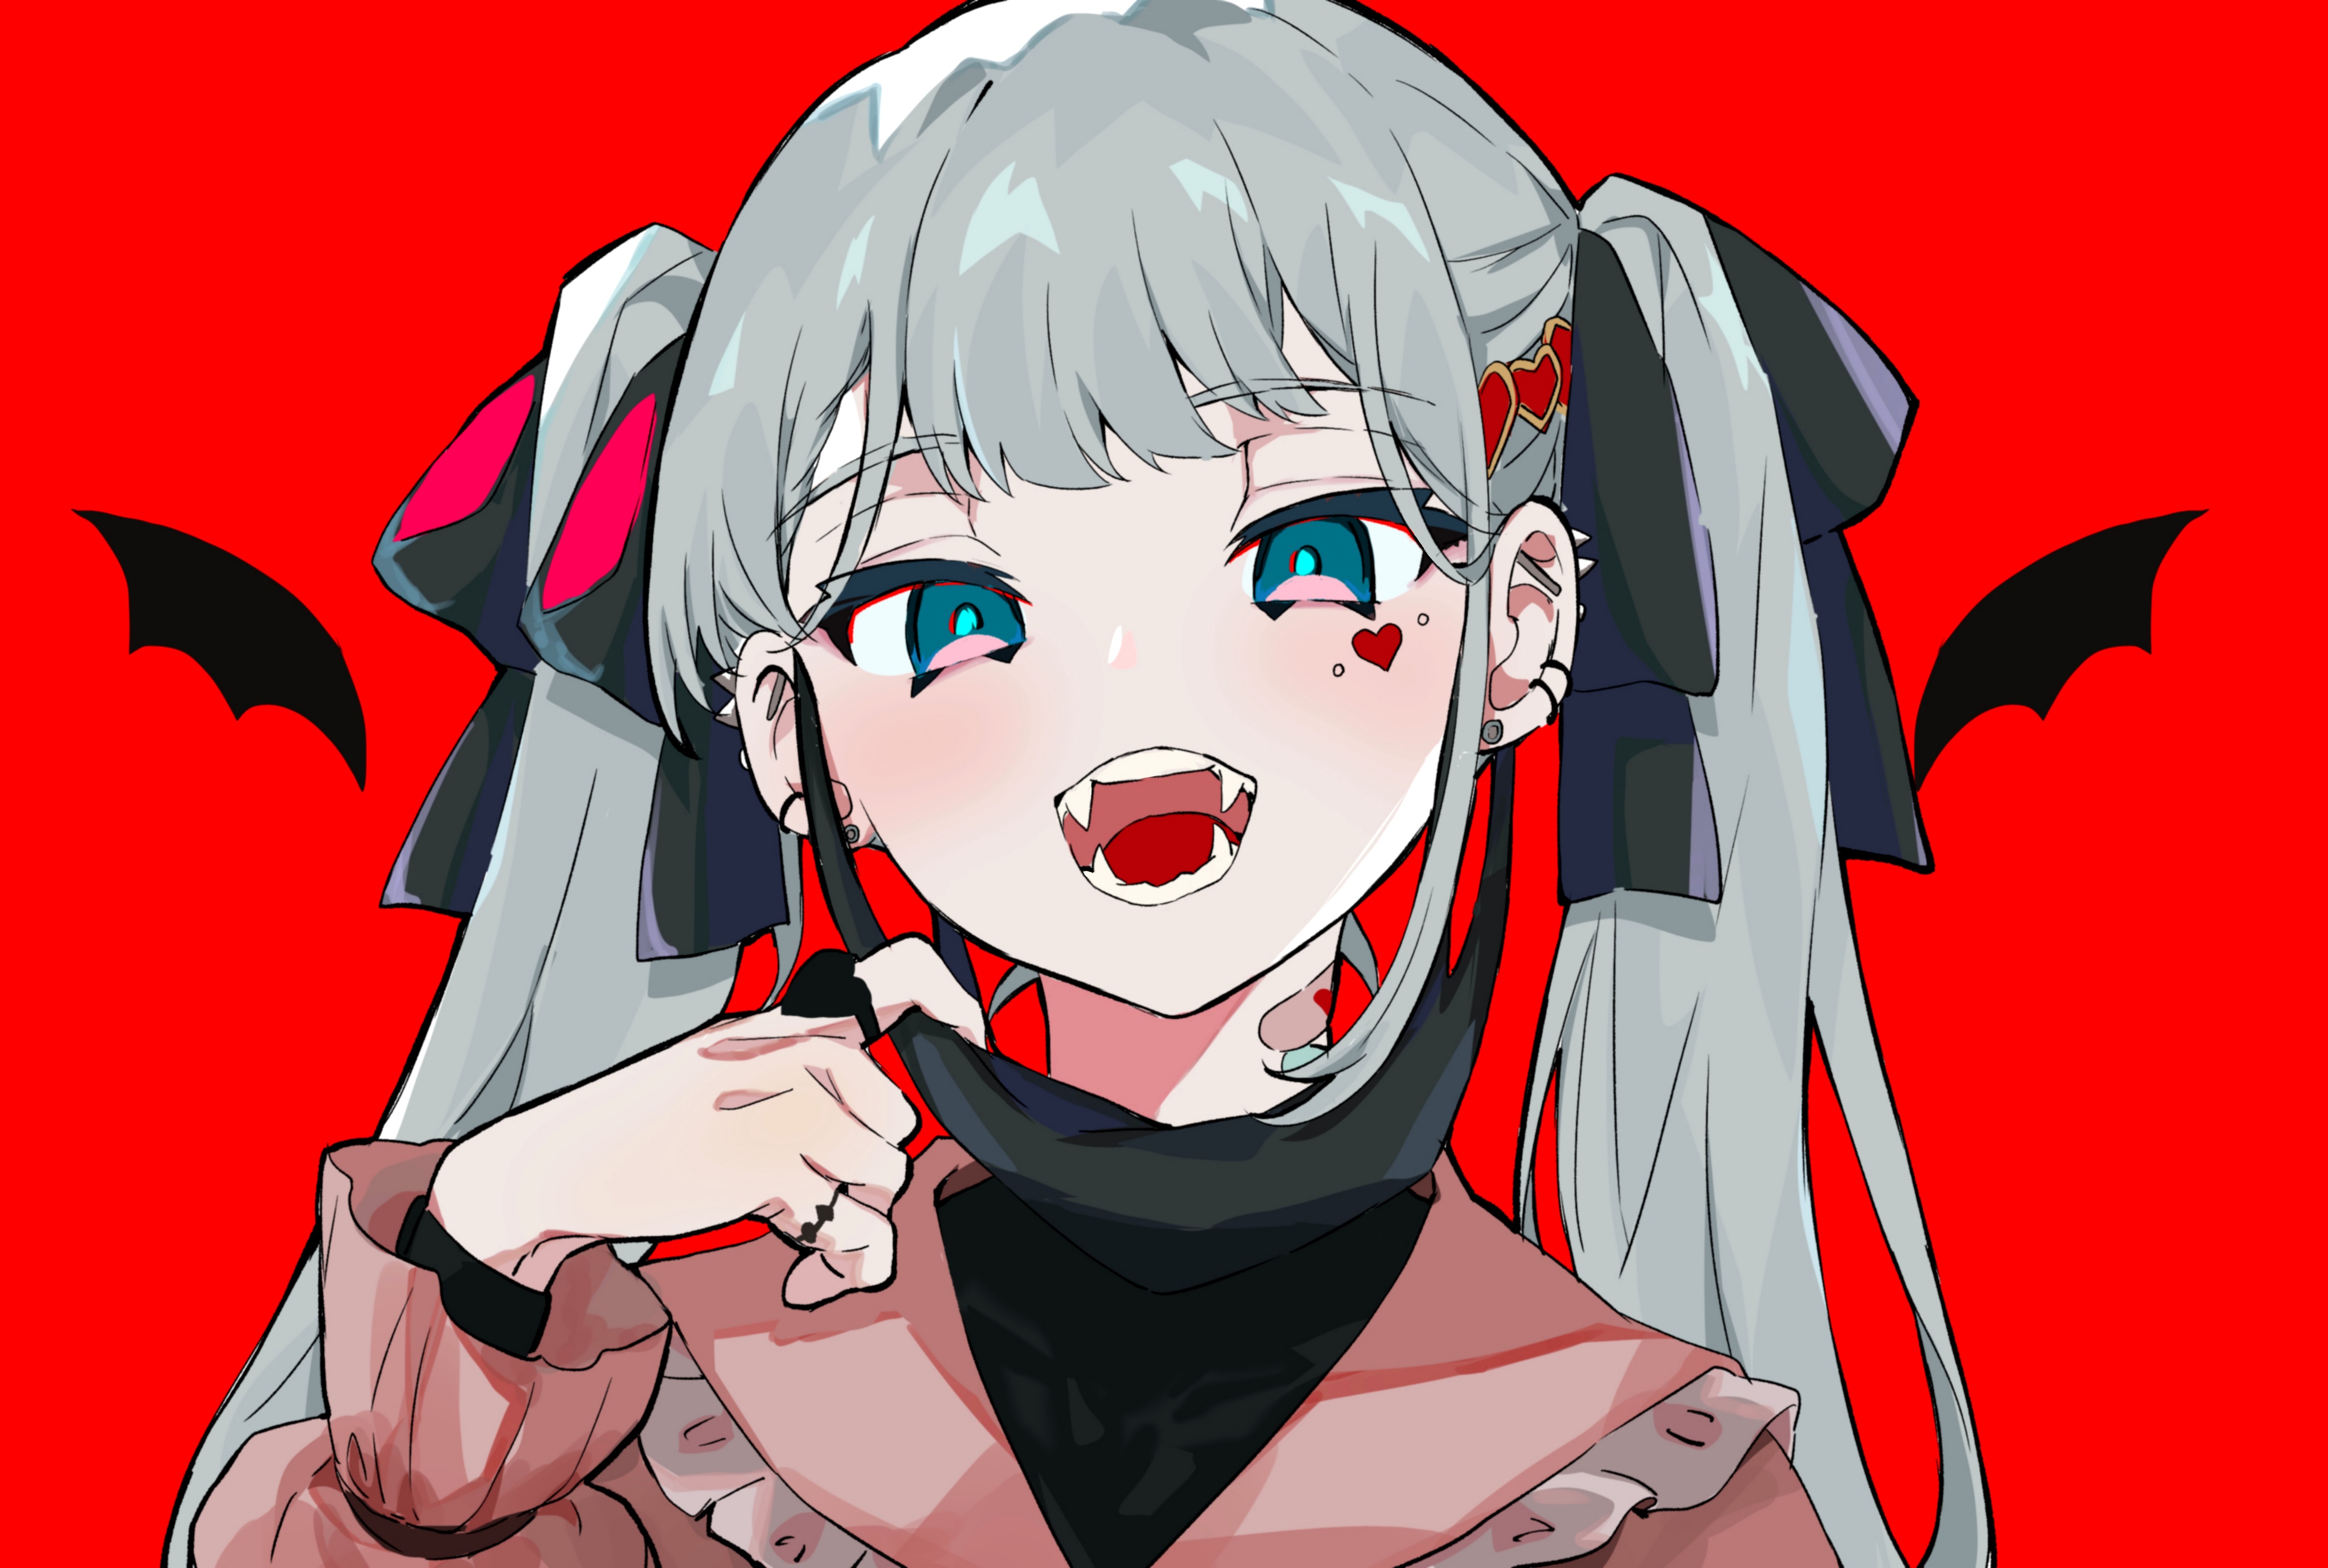 Anime demon girl with horns and vampire teeth' Sticker | Spreadshirt